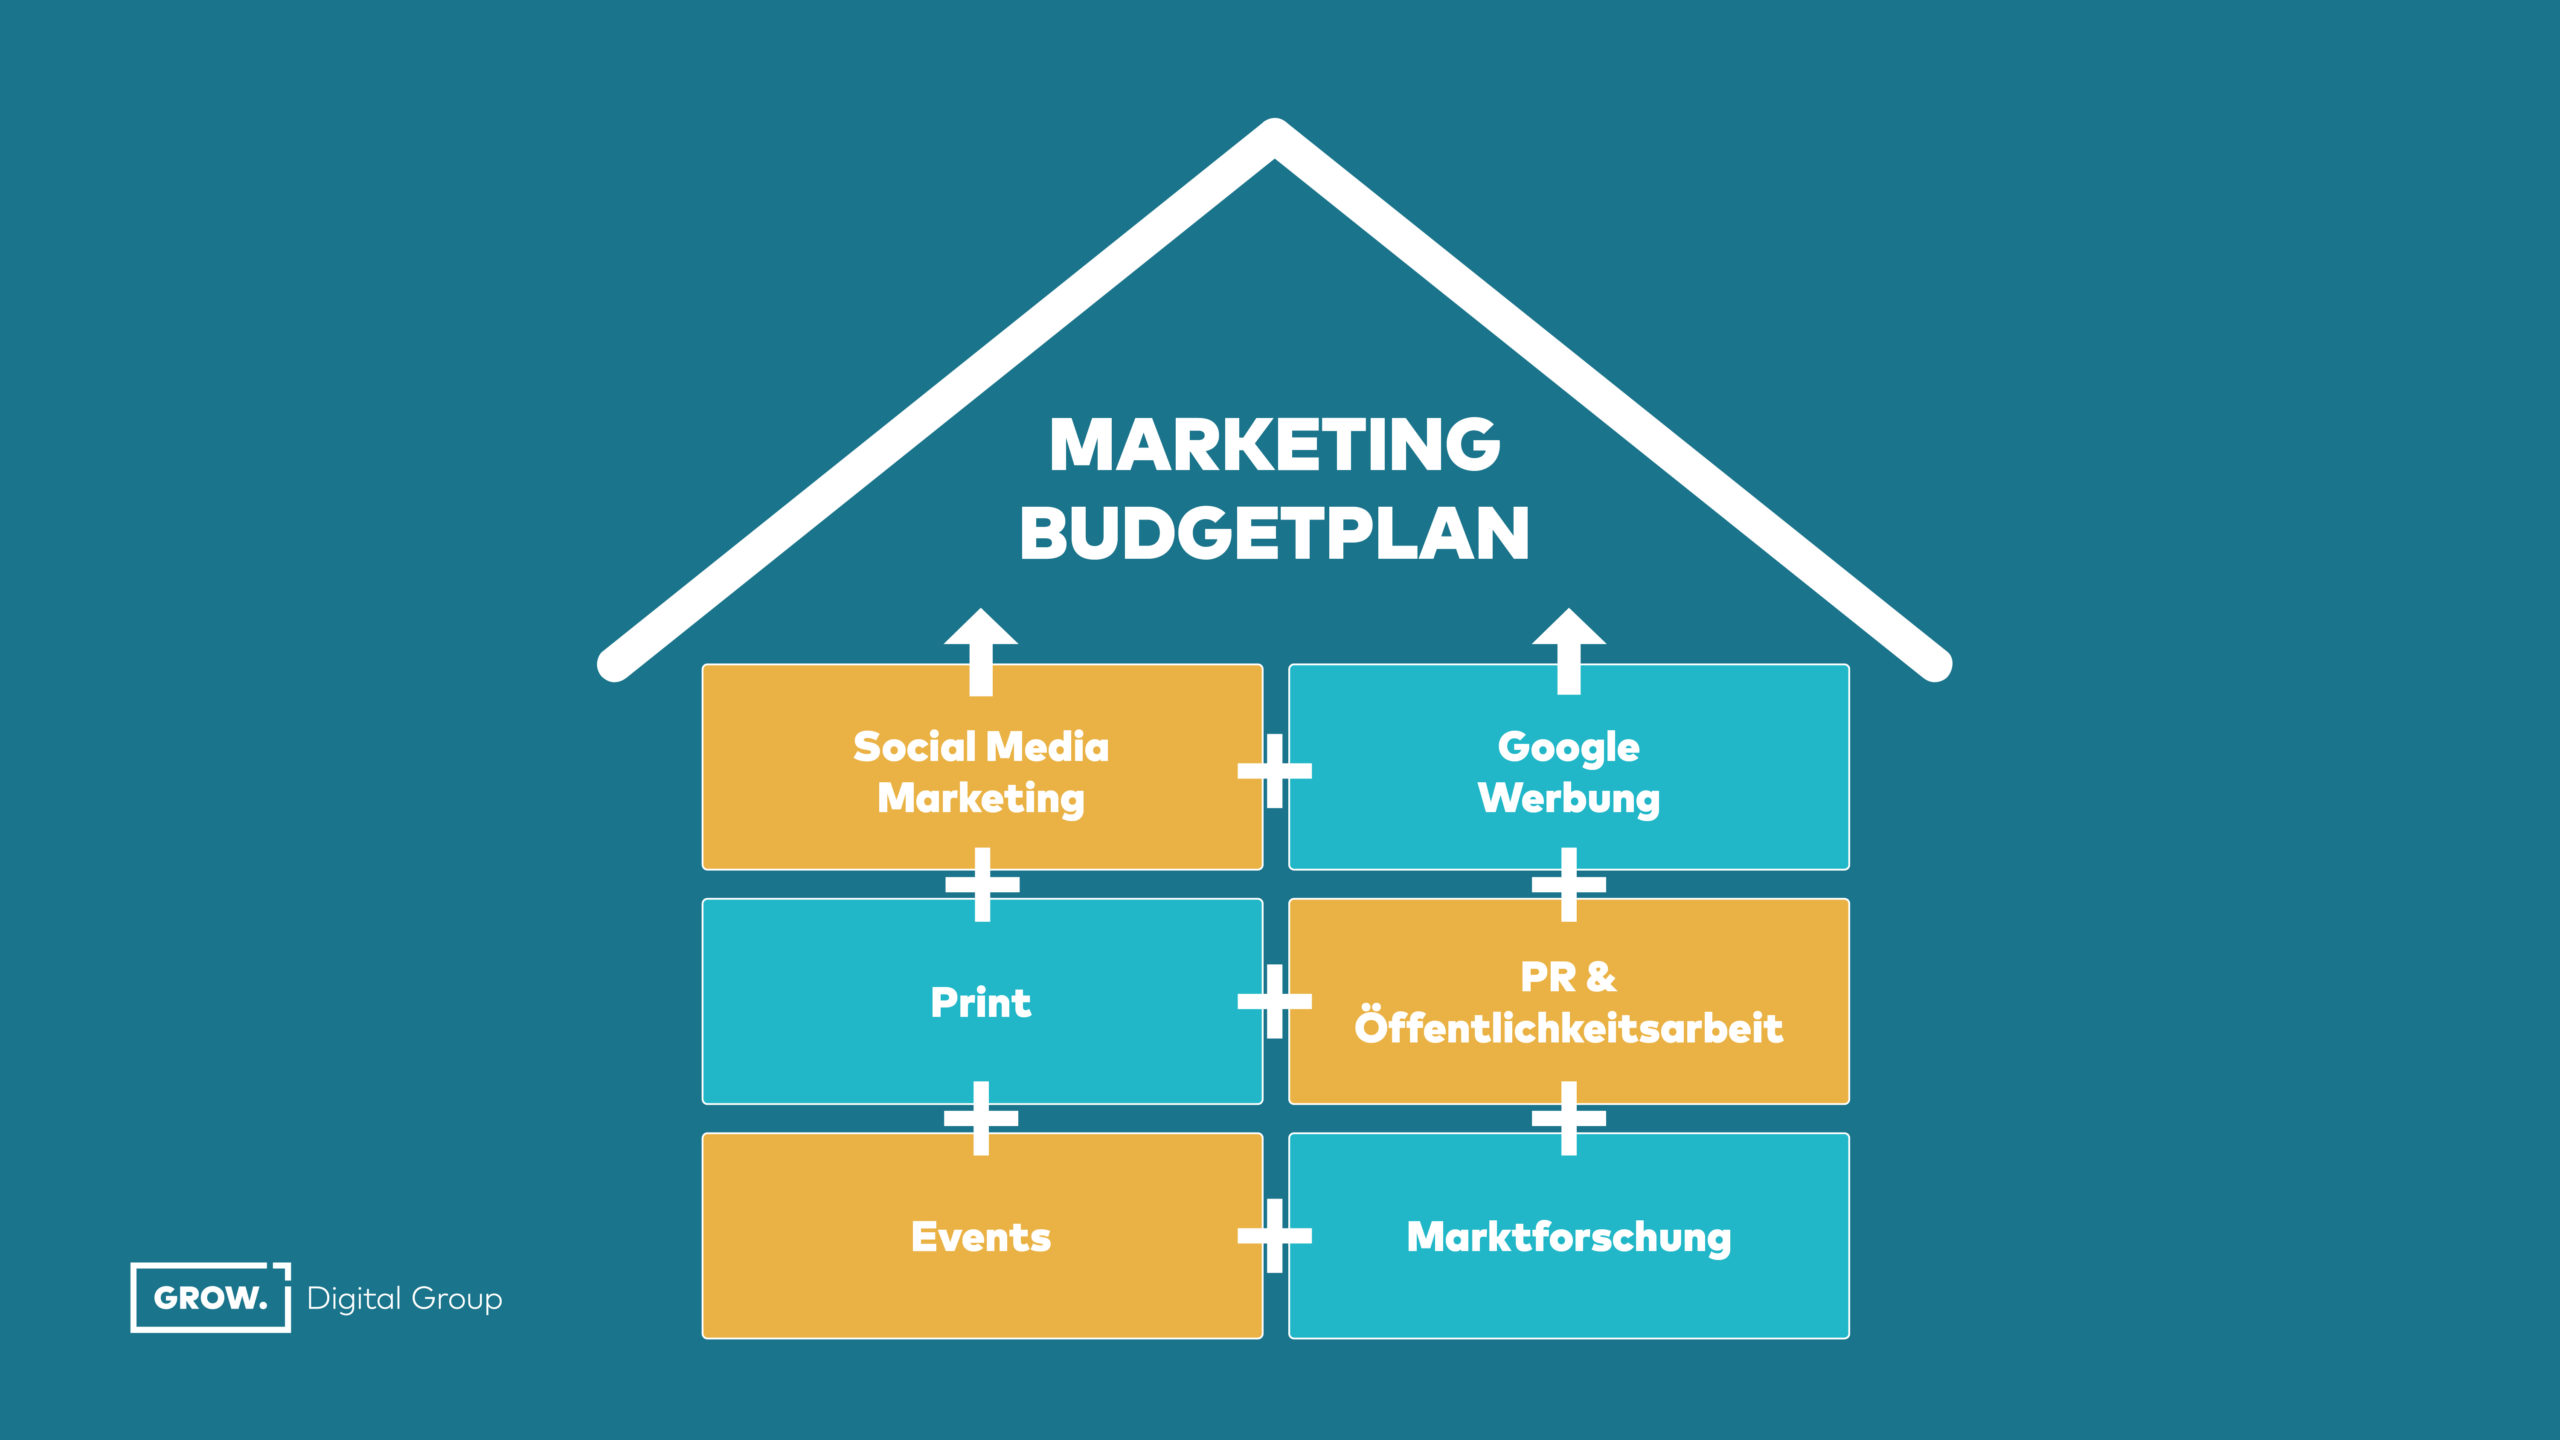 Marketingbudget planen